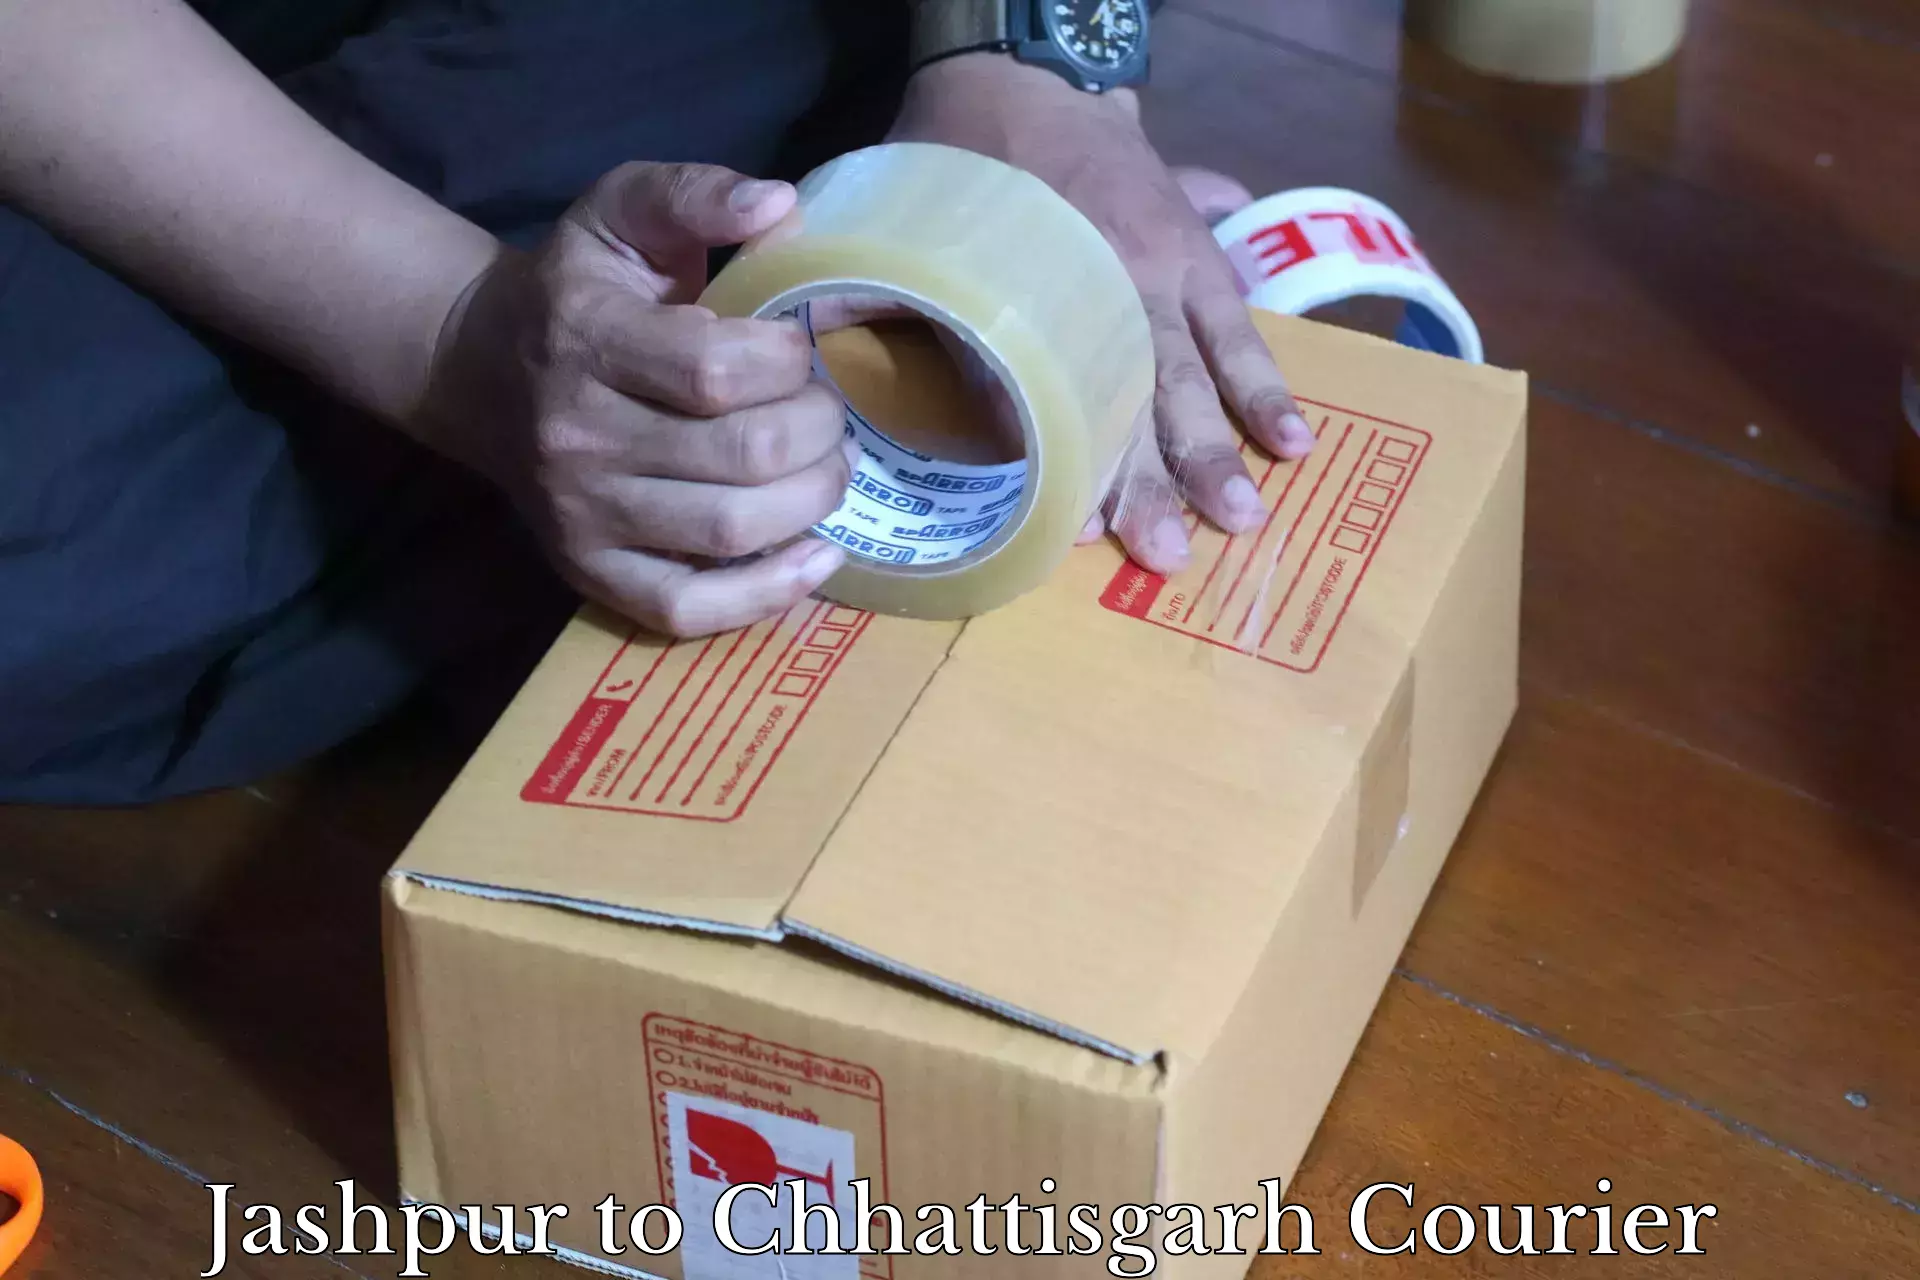 Delivery service partnership Jashpur to Chhattisgarh